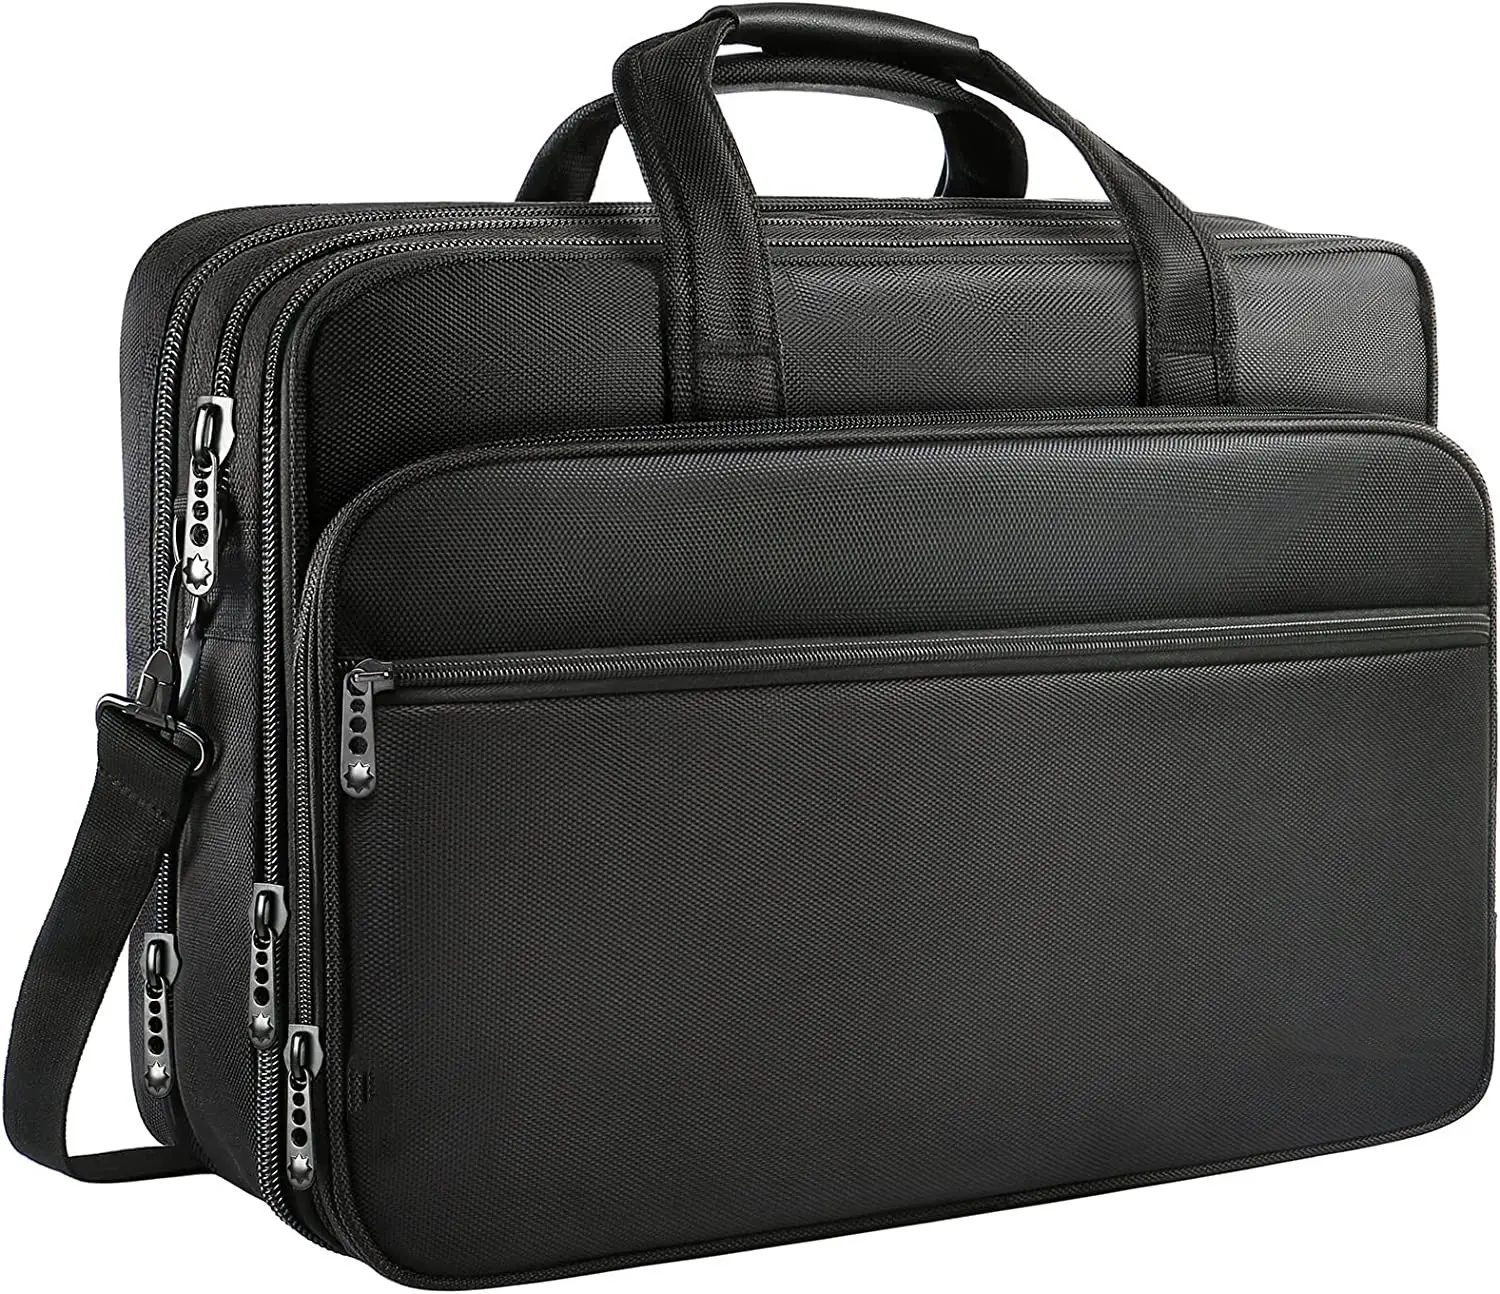 Executive Leather Briefcase For Men Expandable Large Shoulder Messenger Bag 17 Inch 18 Inch Business Travel Briefcase